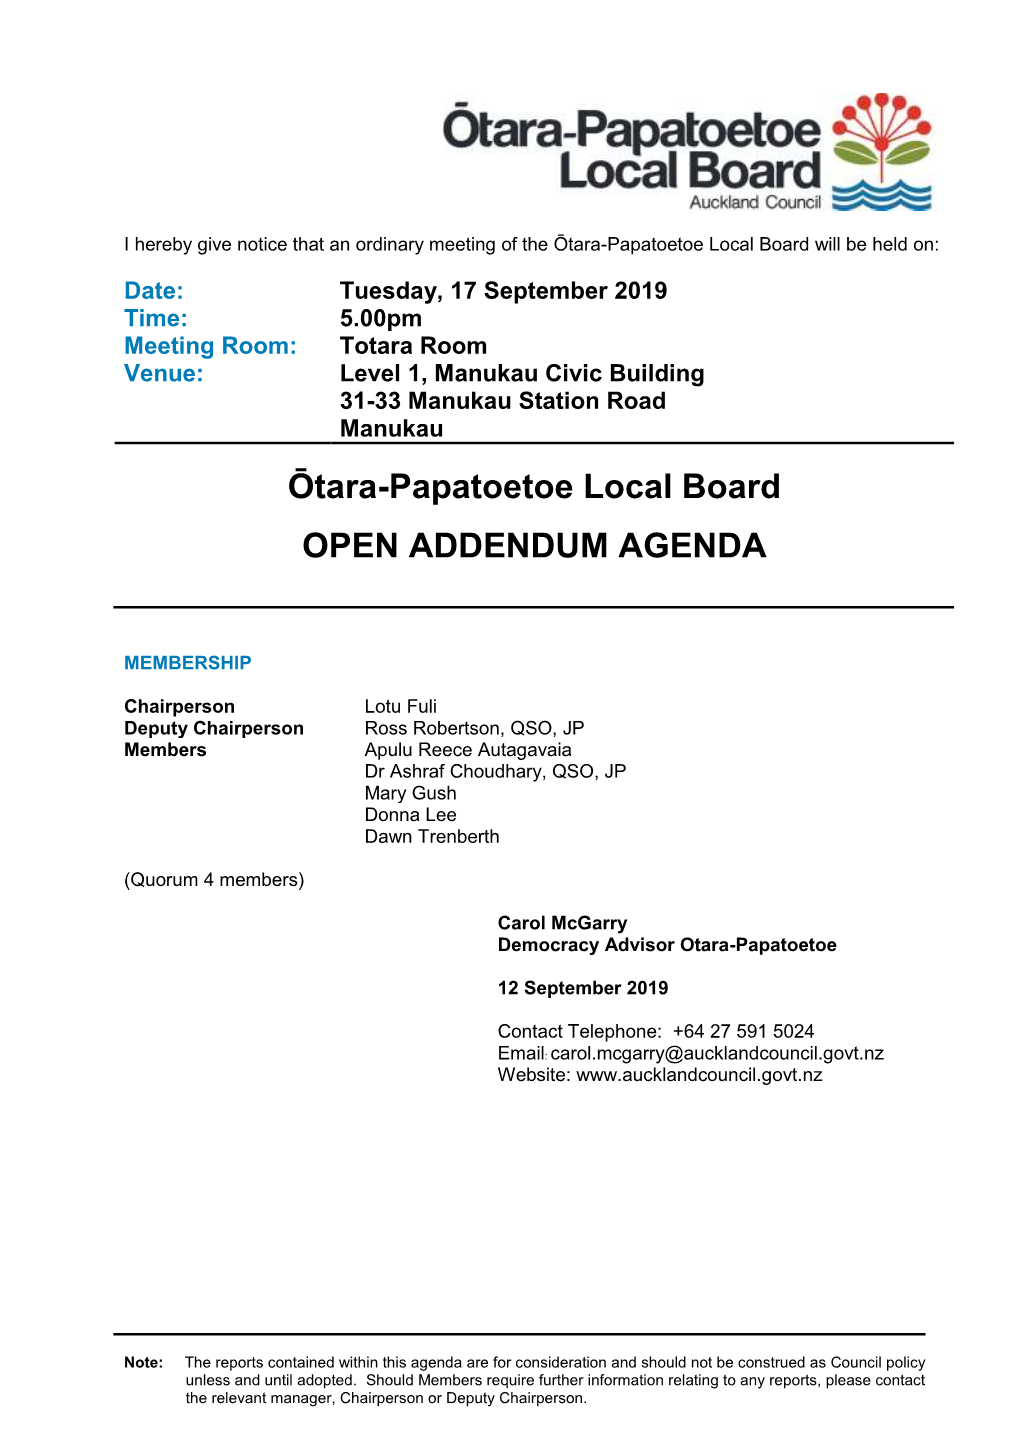 Addendum Agenda of Ōtara-Papatoetoe Local Board